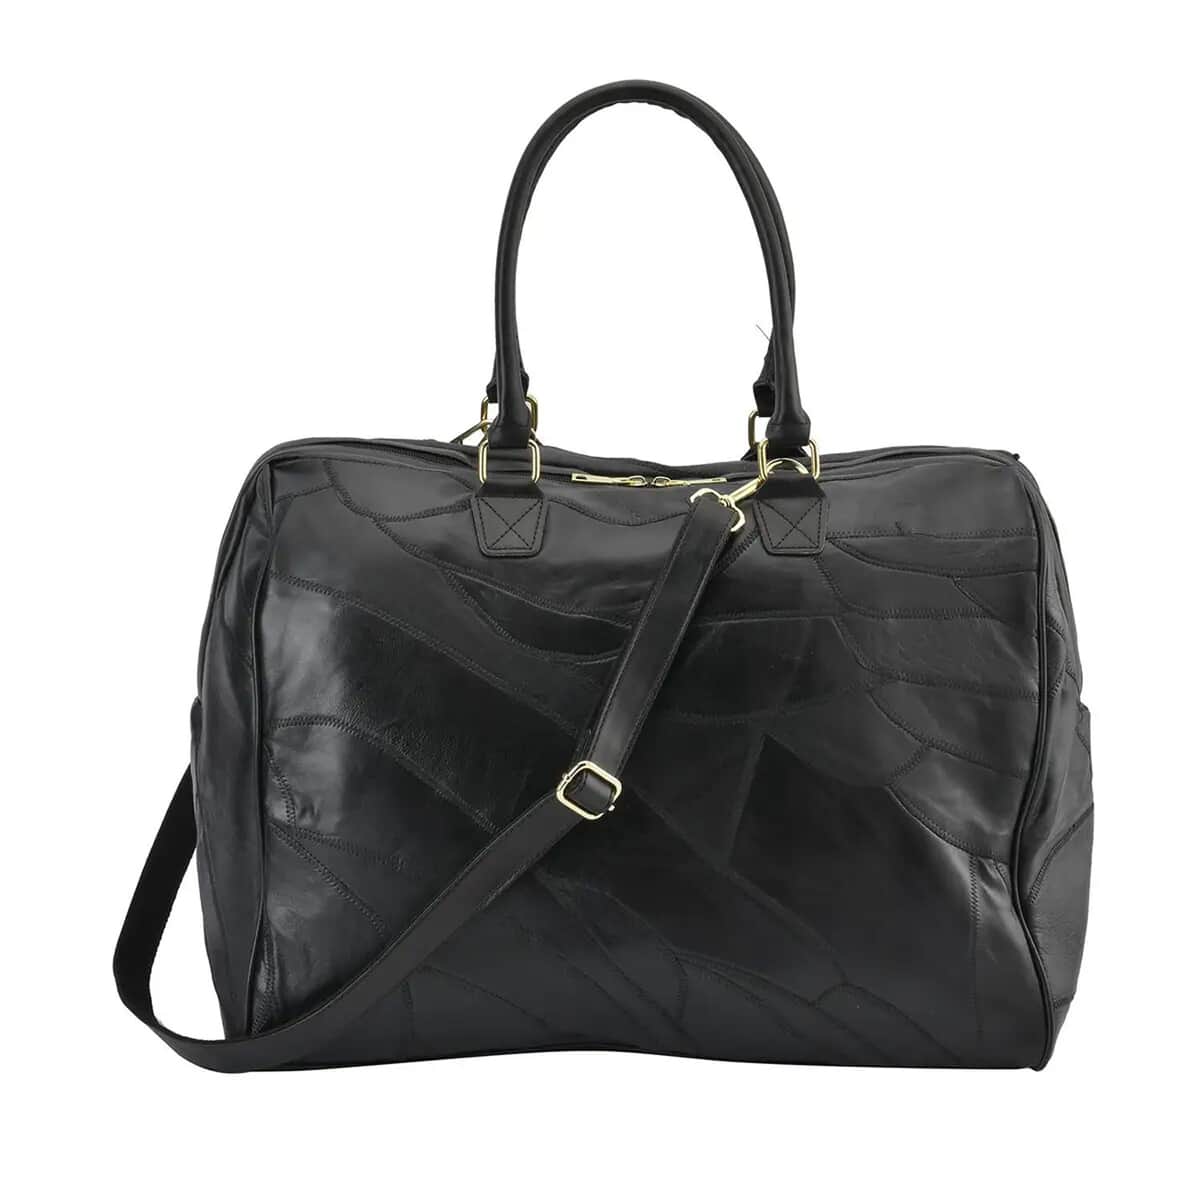 Black Sheepskin Leather Travel Bag with Handle Drop and Shoulder Strap, Best Crossbody Epic Travel Bag, Western Zipped Bags for Travel, Classic Shoulder Bag image number 0